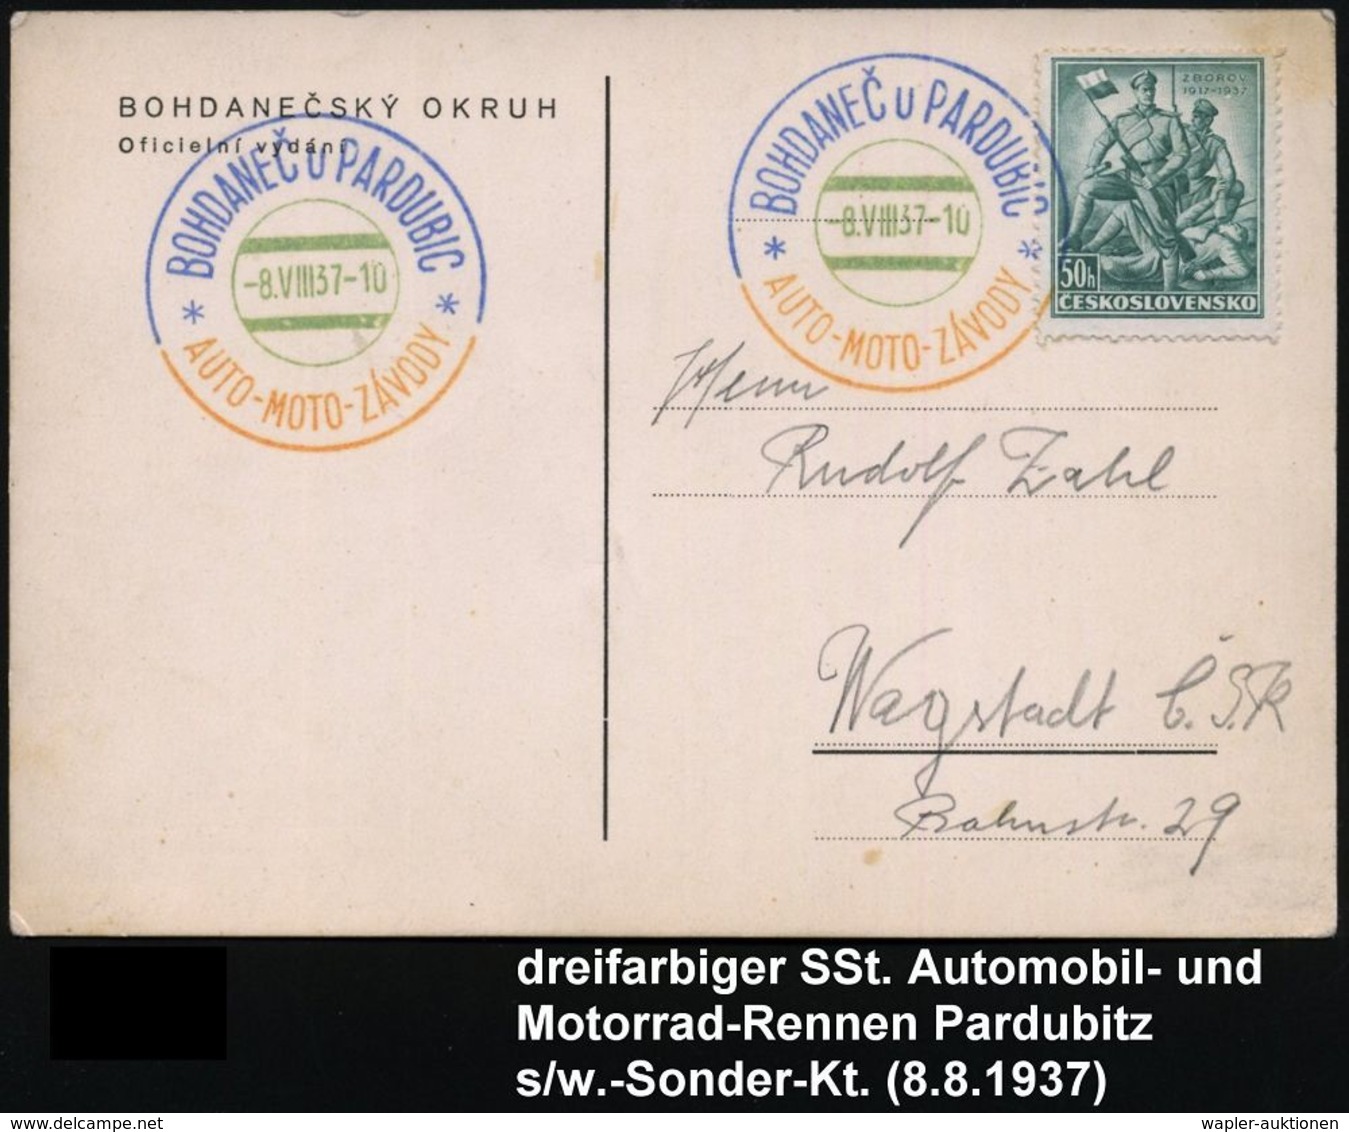 MOTORSPORT / MOTORSPORT-VERBÄNDE : TSCHECHOSLOWAKEI 1937 (8.8.) Dreifarbiger SSt: BOHDANEC U PARDUBICE/AUTO-MOTO-ZAVODY  - Automobile